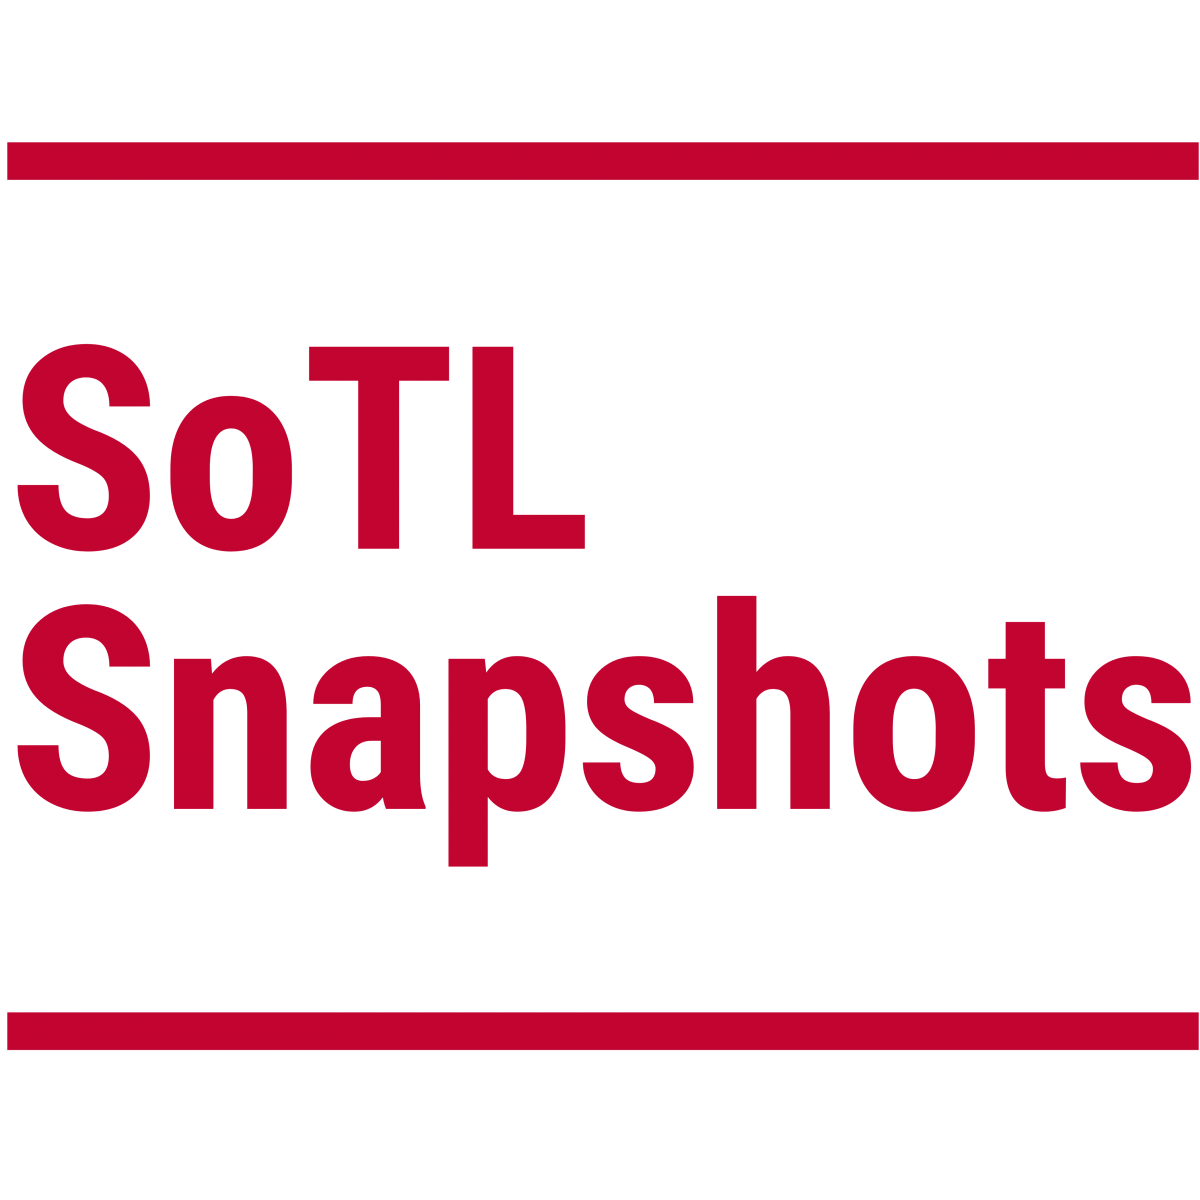 SoTL Snapshots written in red.